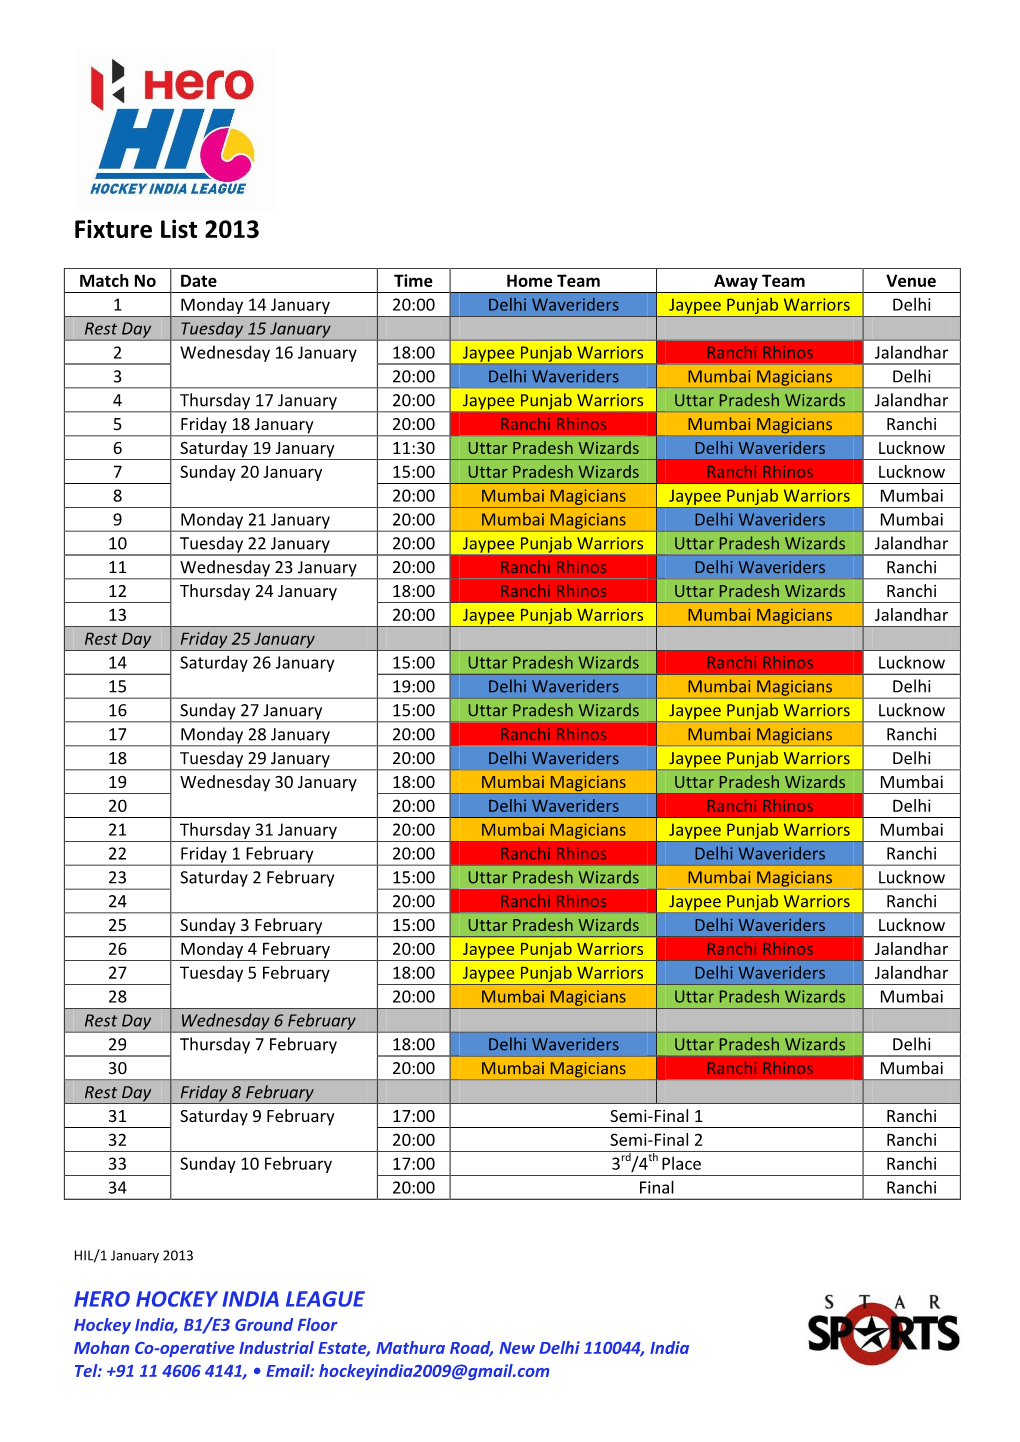 HIL Fixture List 2013